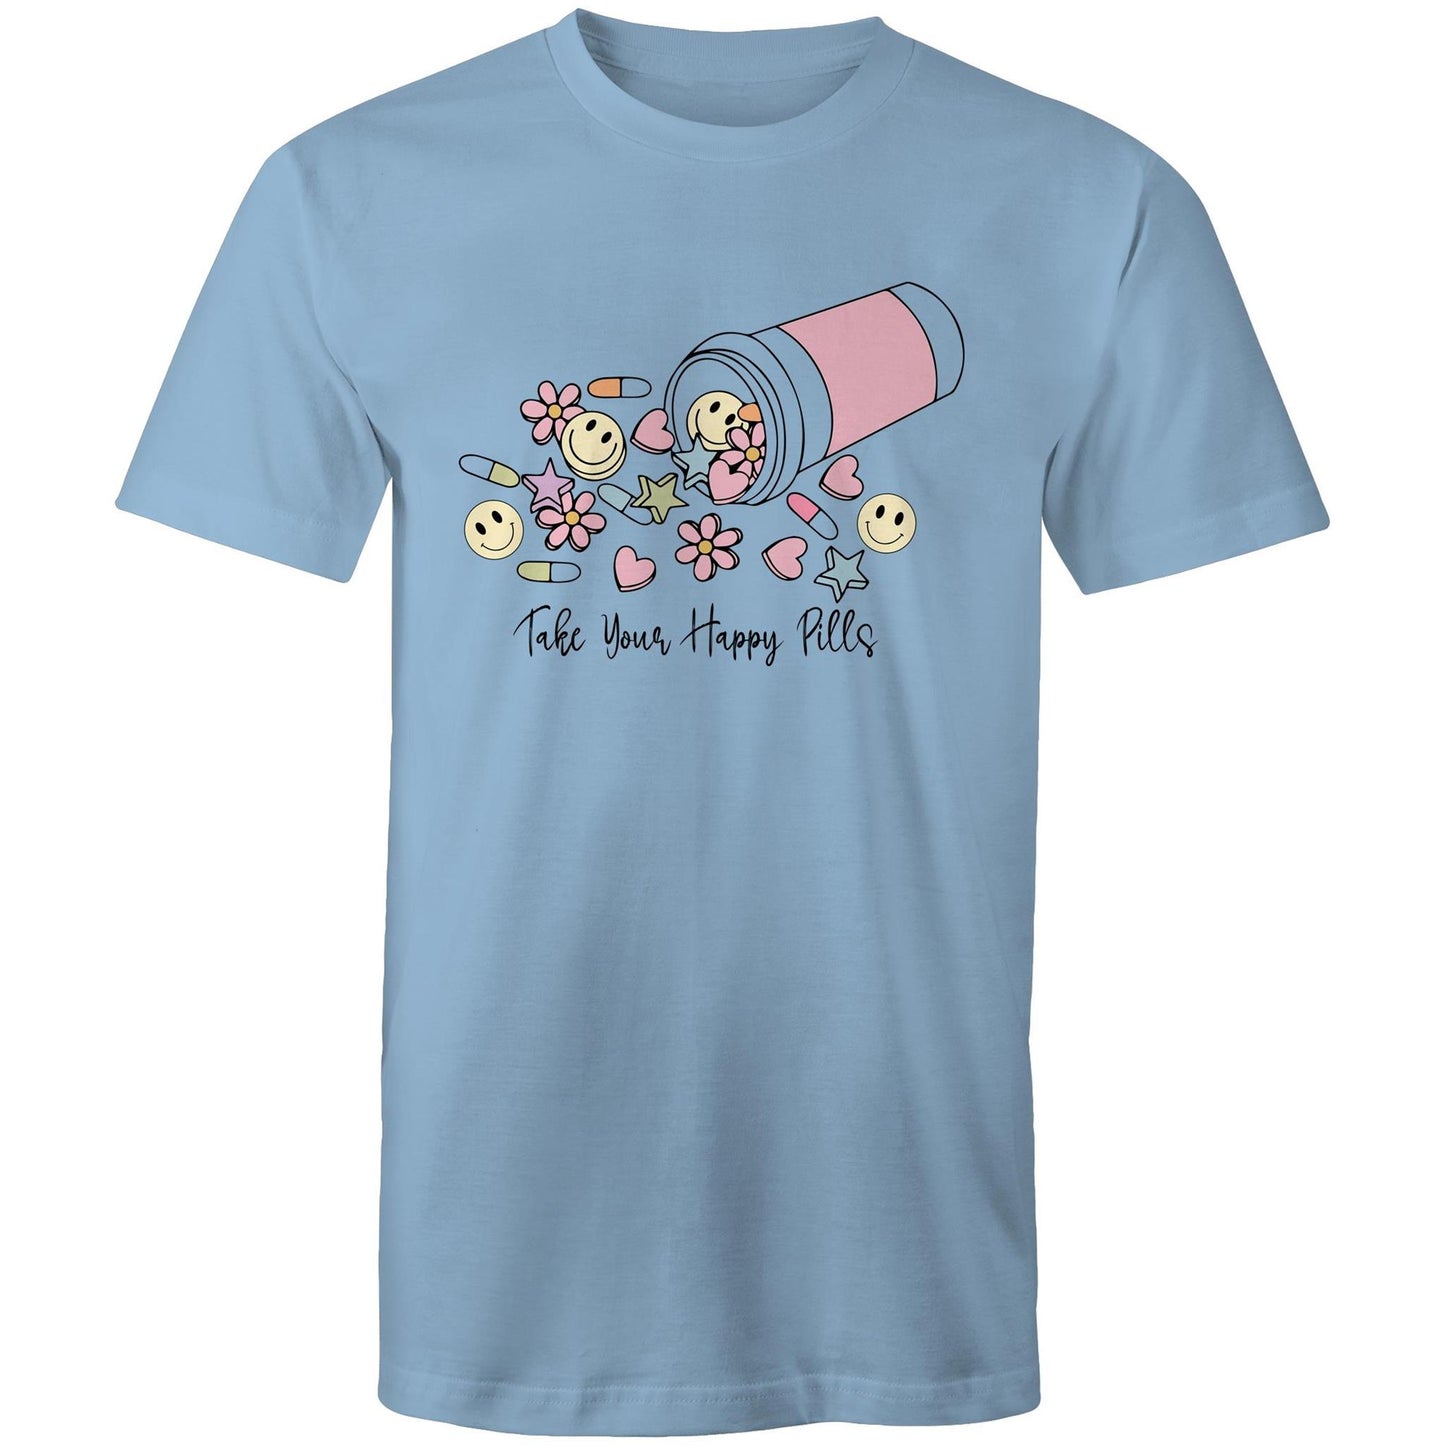 Mens T-Shirt - Take Your Happy Pills